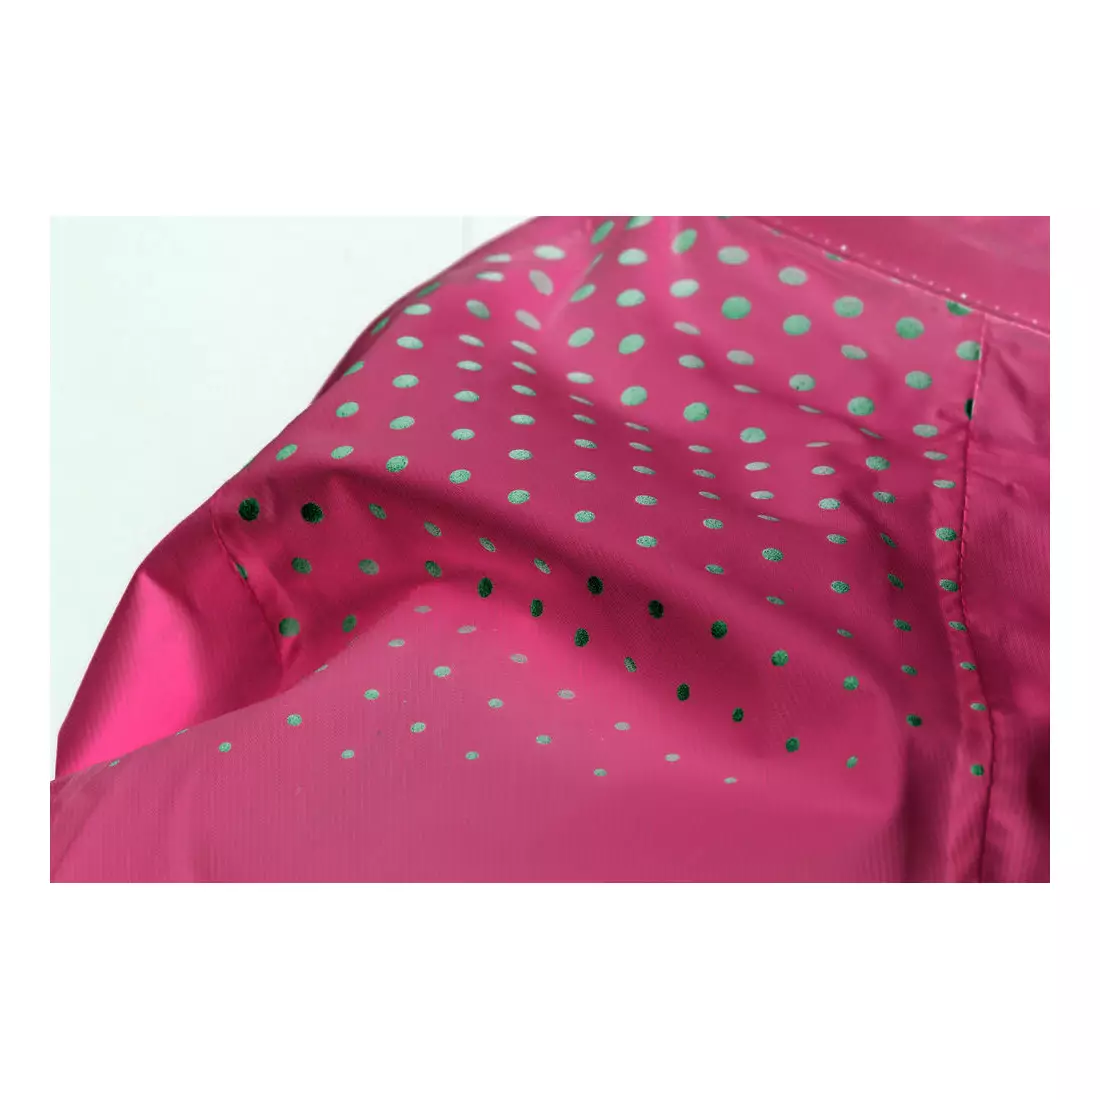 CRAFT MOVE women's rainproof cycling jacket 1903257-2403